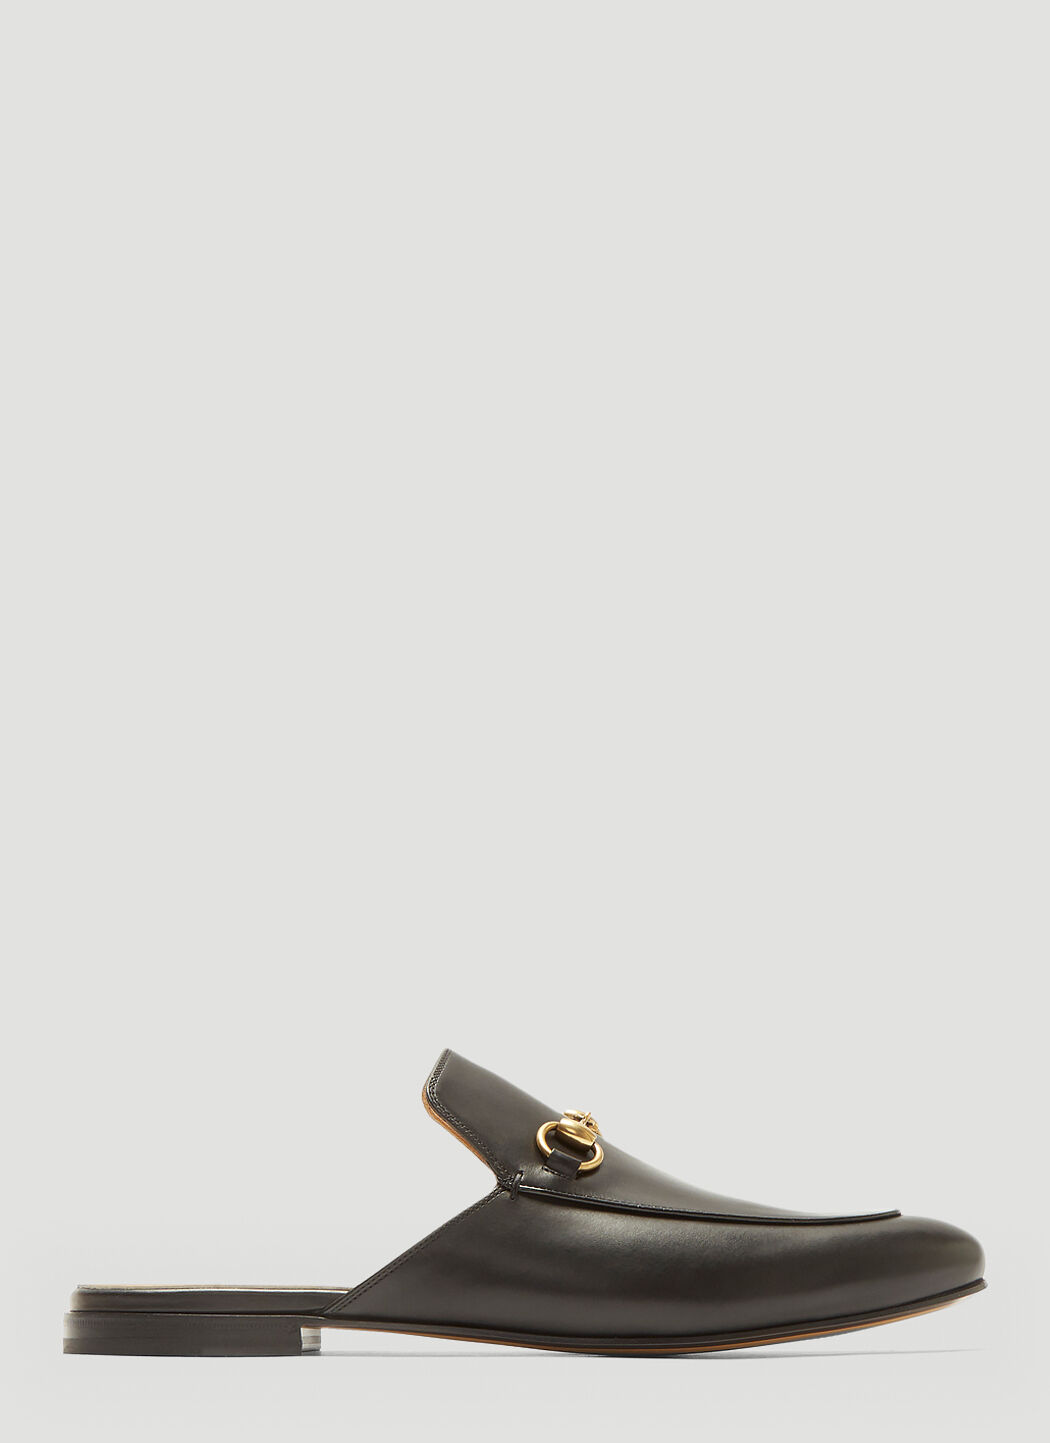 Saint Laurent Horsebit Leather Slipper Shoes Black sla0134043